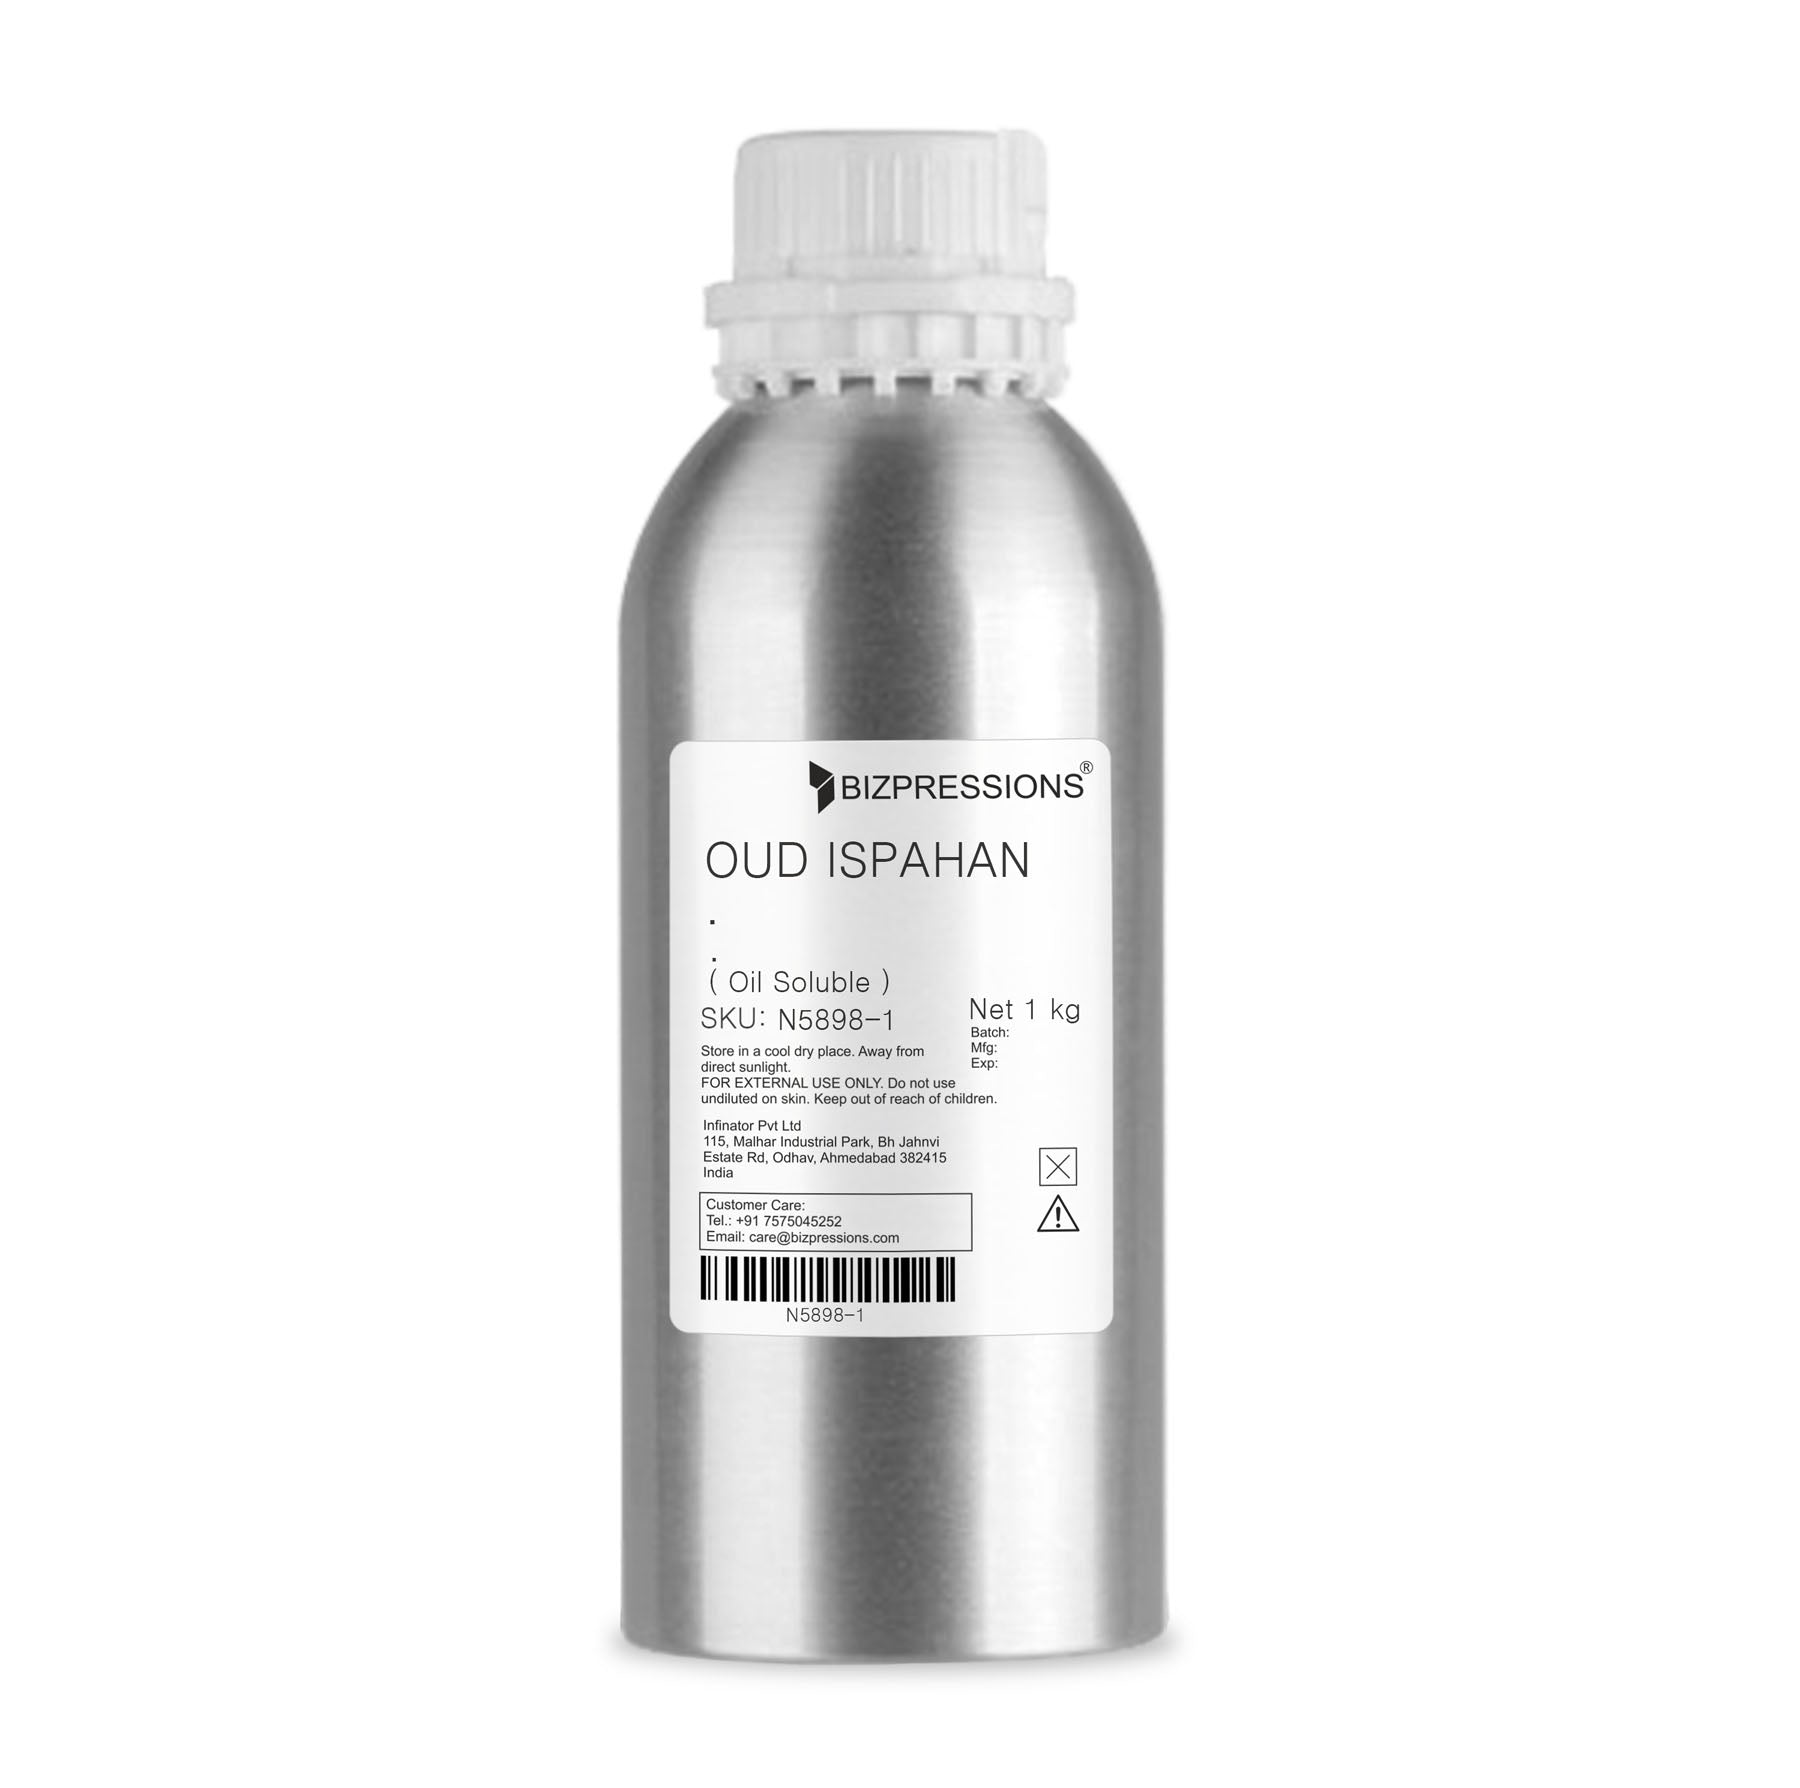 OUD ISPAHAN - Fragrance ( Oil Soluble ) - 1 kg